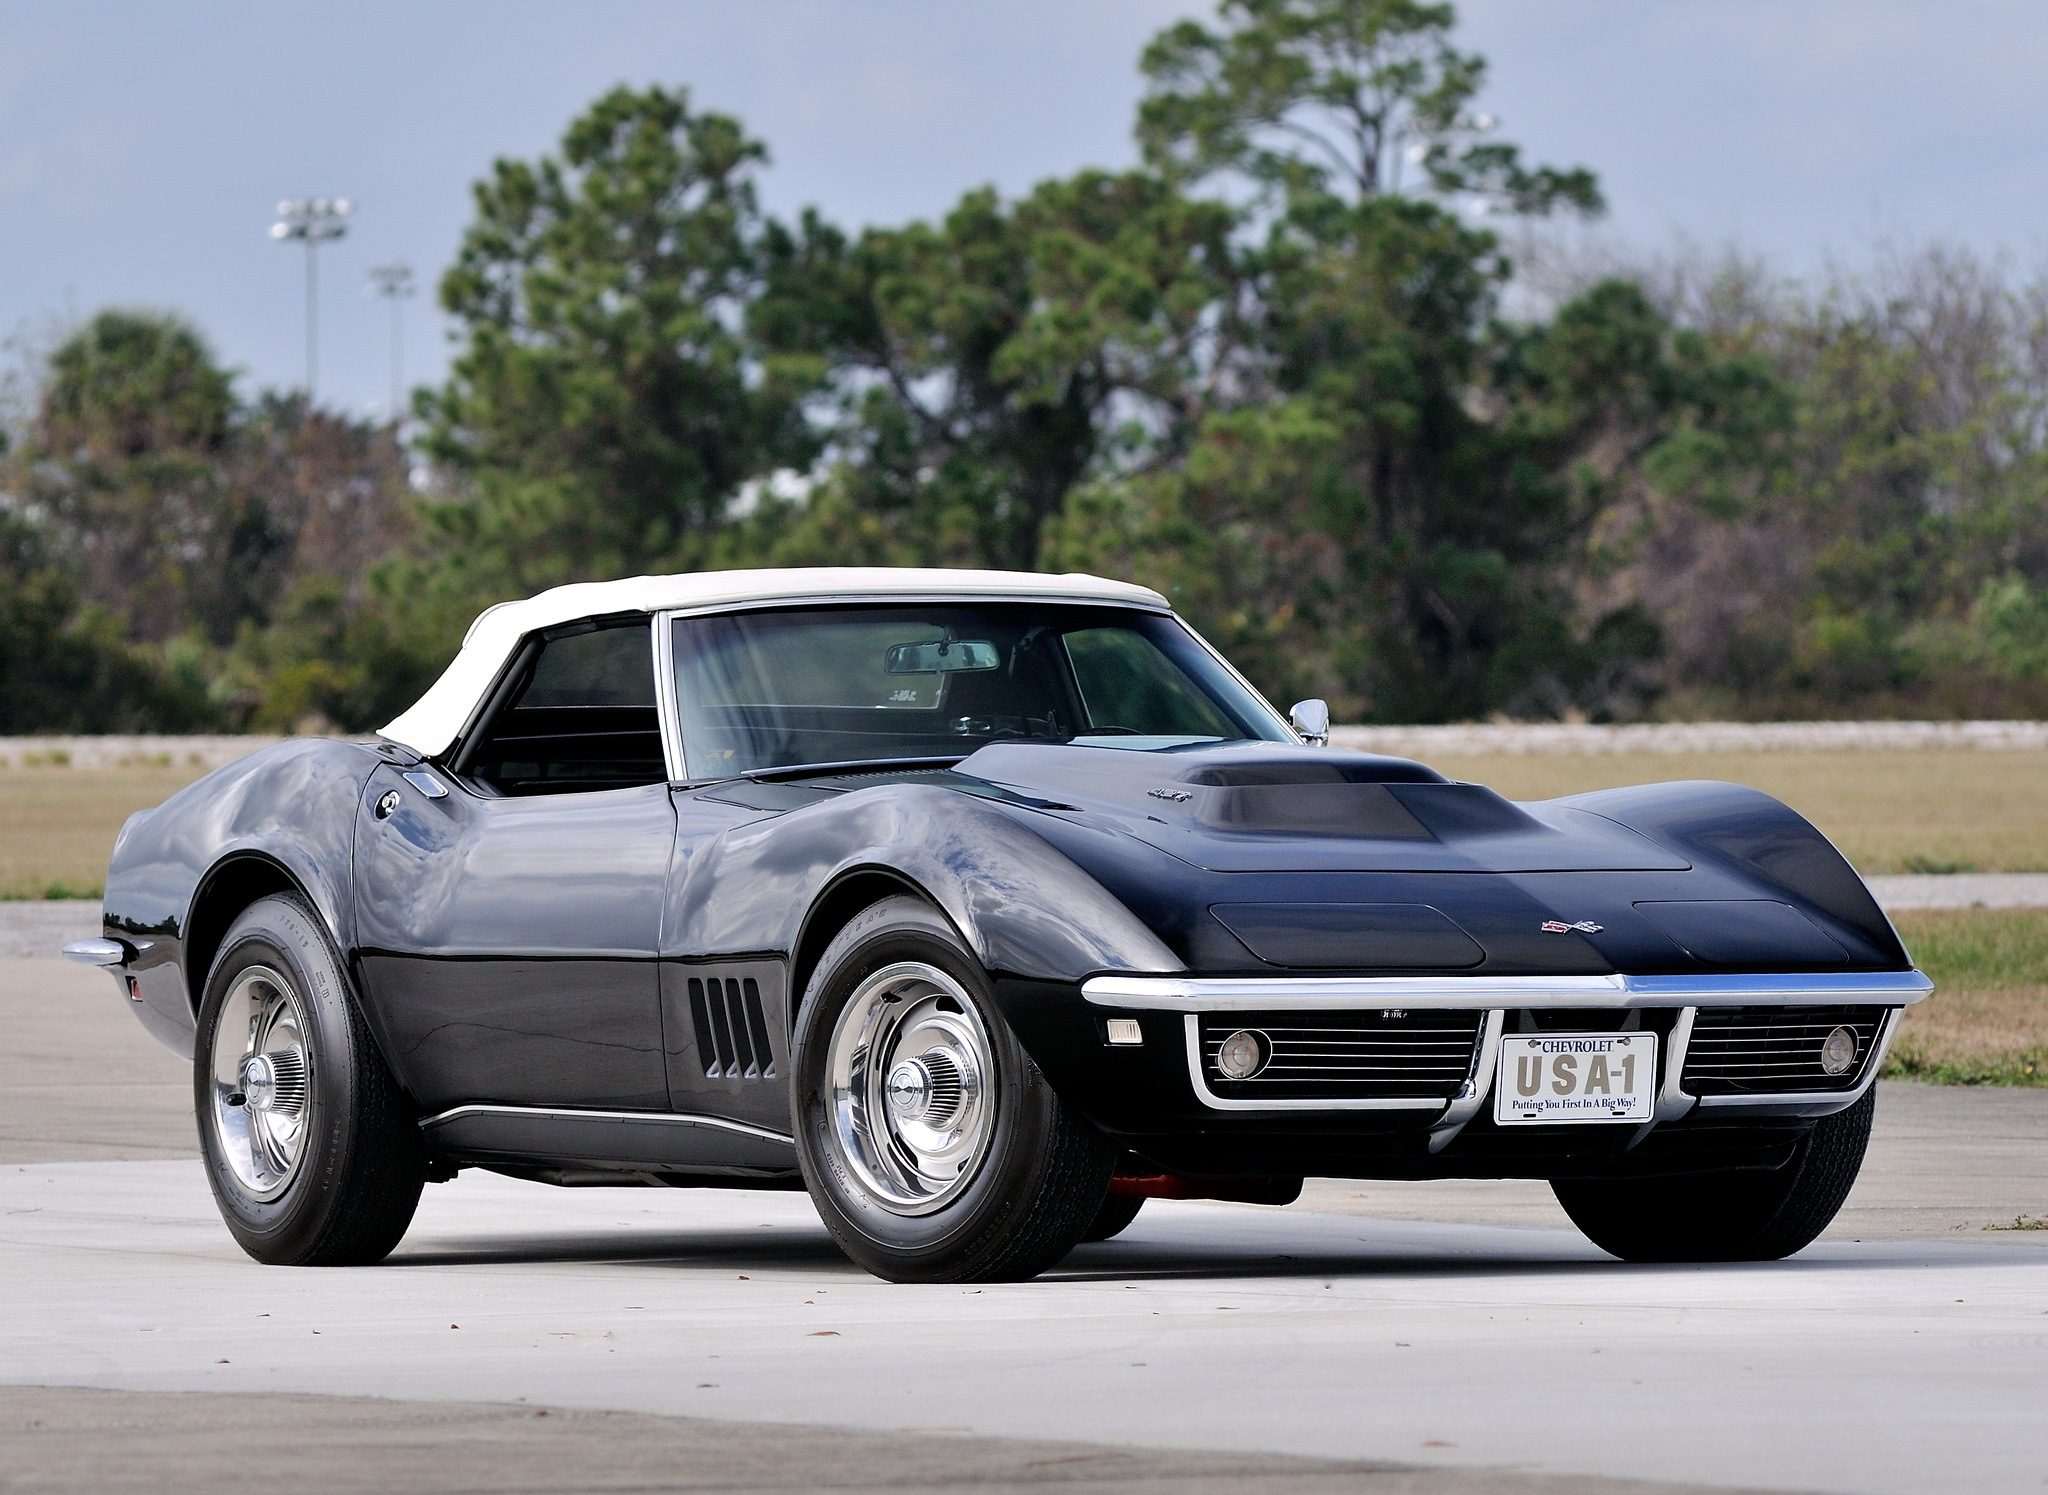 Corvette Of The Day: 1968 Chevrolet Corvette L88 427/430 HP